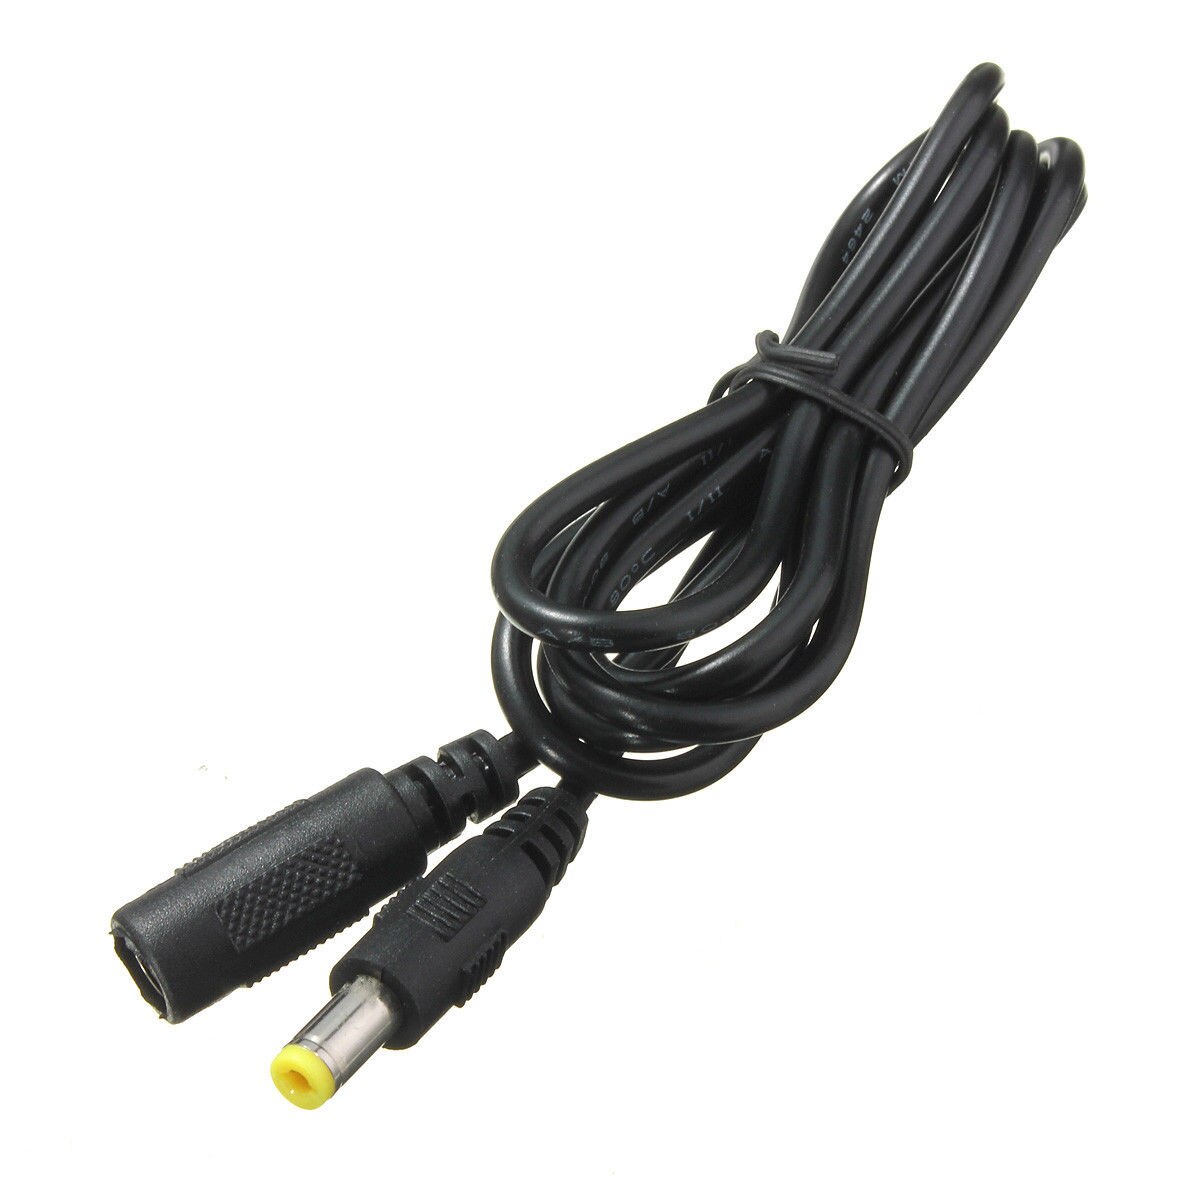 Top 5.5mm x 2.1mm DC Power Jack Man-vrouw Extension Cable Cord Lead ConnectorCable Lengte: 1.2 M